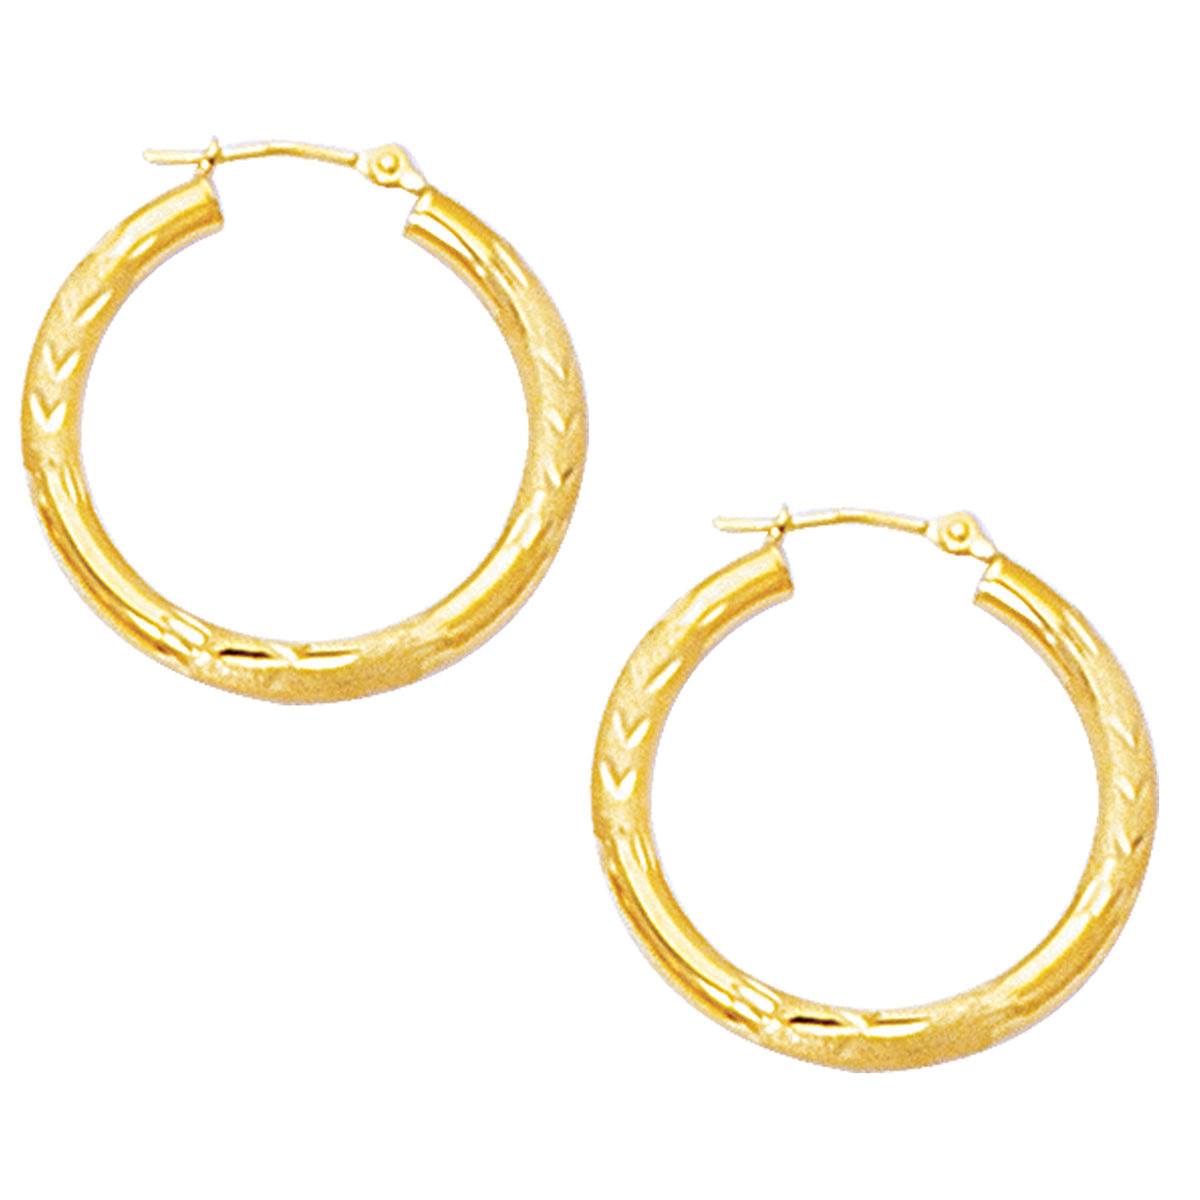 10k Yellow Gold Diamond Cut Design Round Shape Hoop Earrings, Diameter 25mm fine designer jewelry for men and women